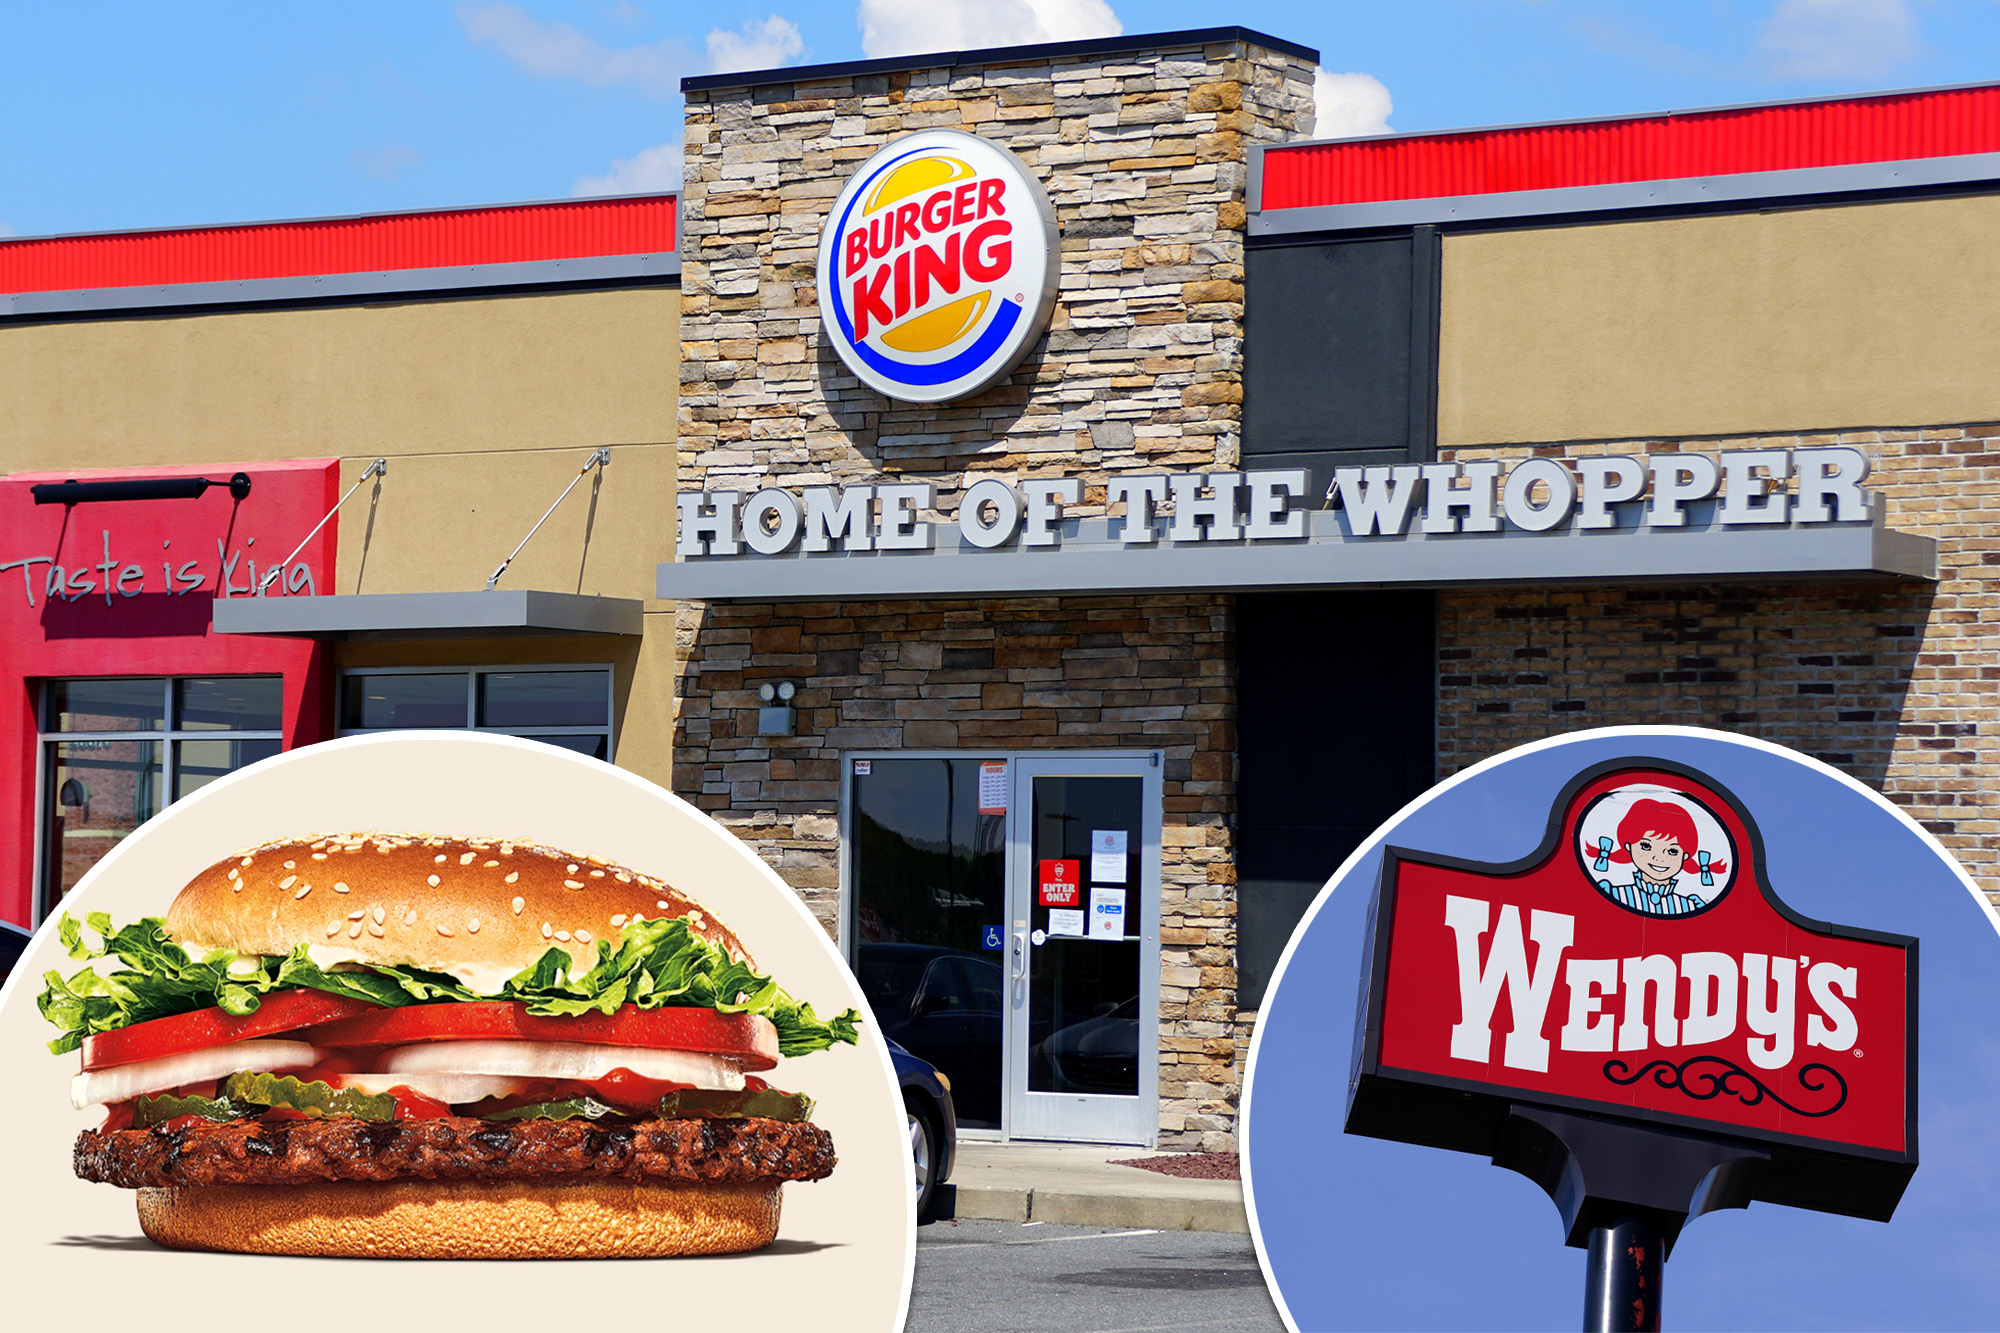 Millsboro, Delaware, U.S.A - June 29, 2020 - The front entrance of Burger King